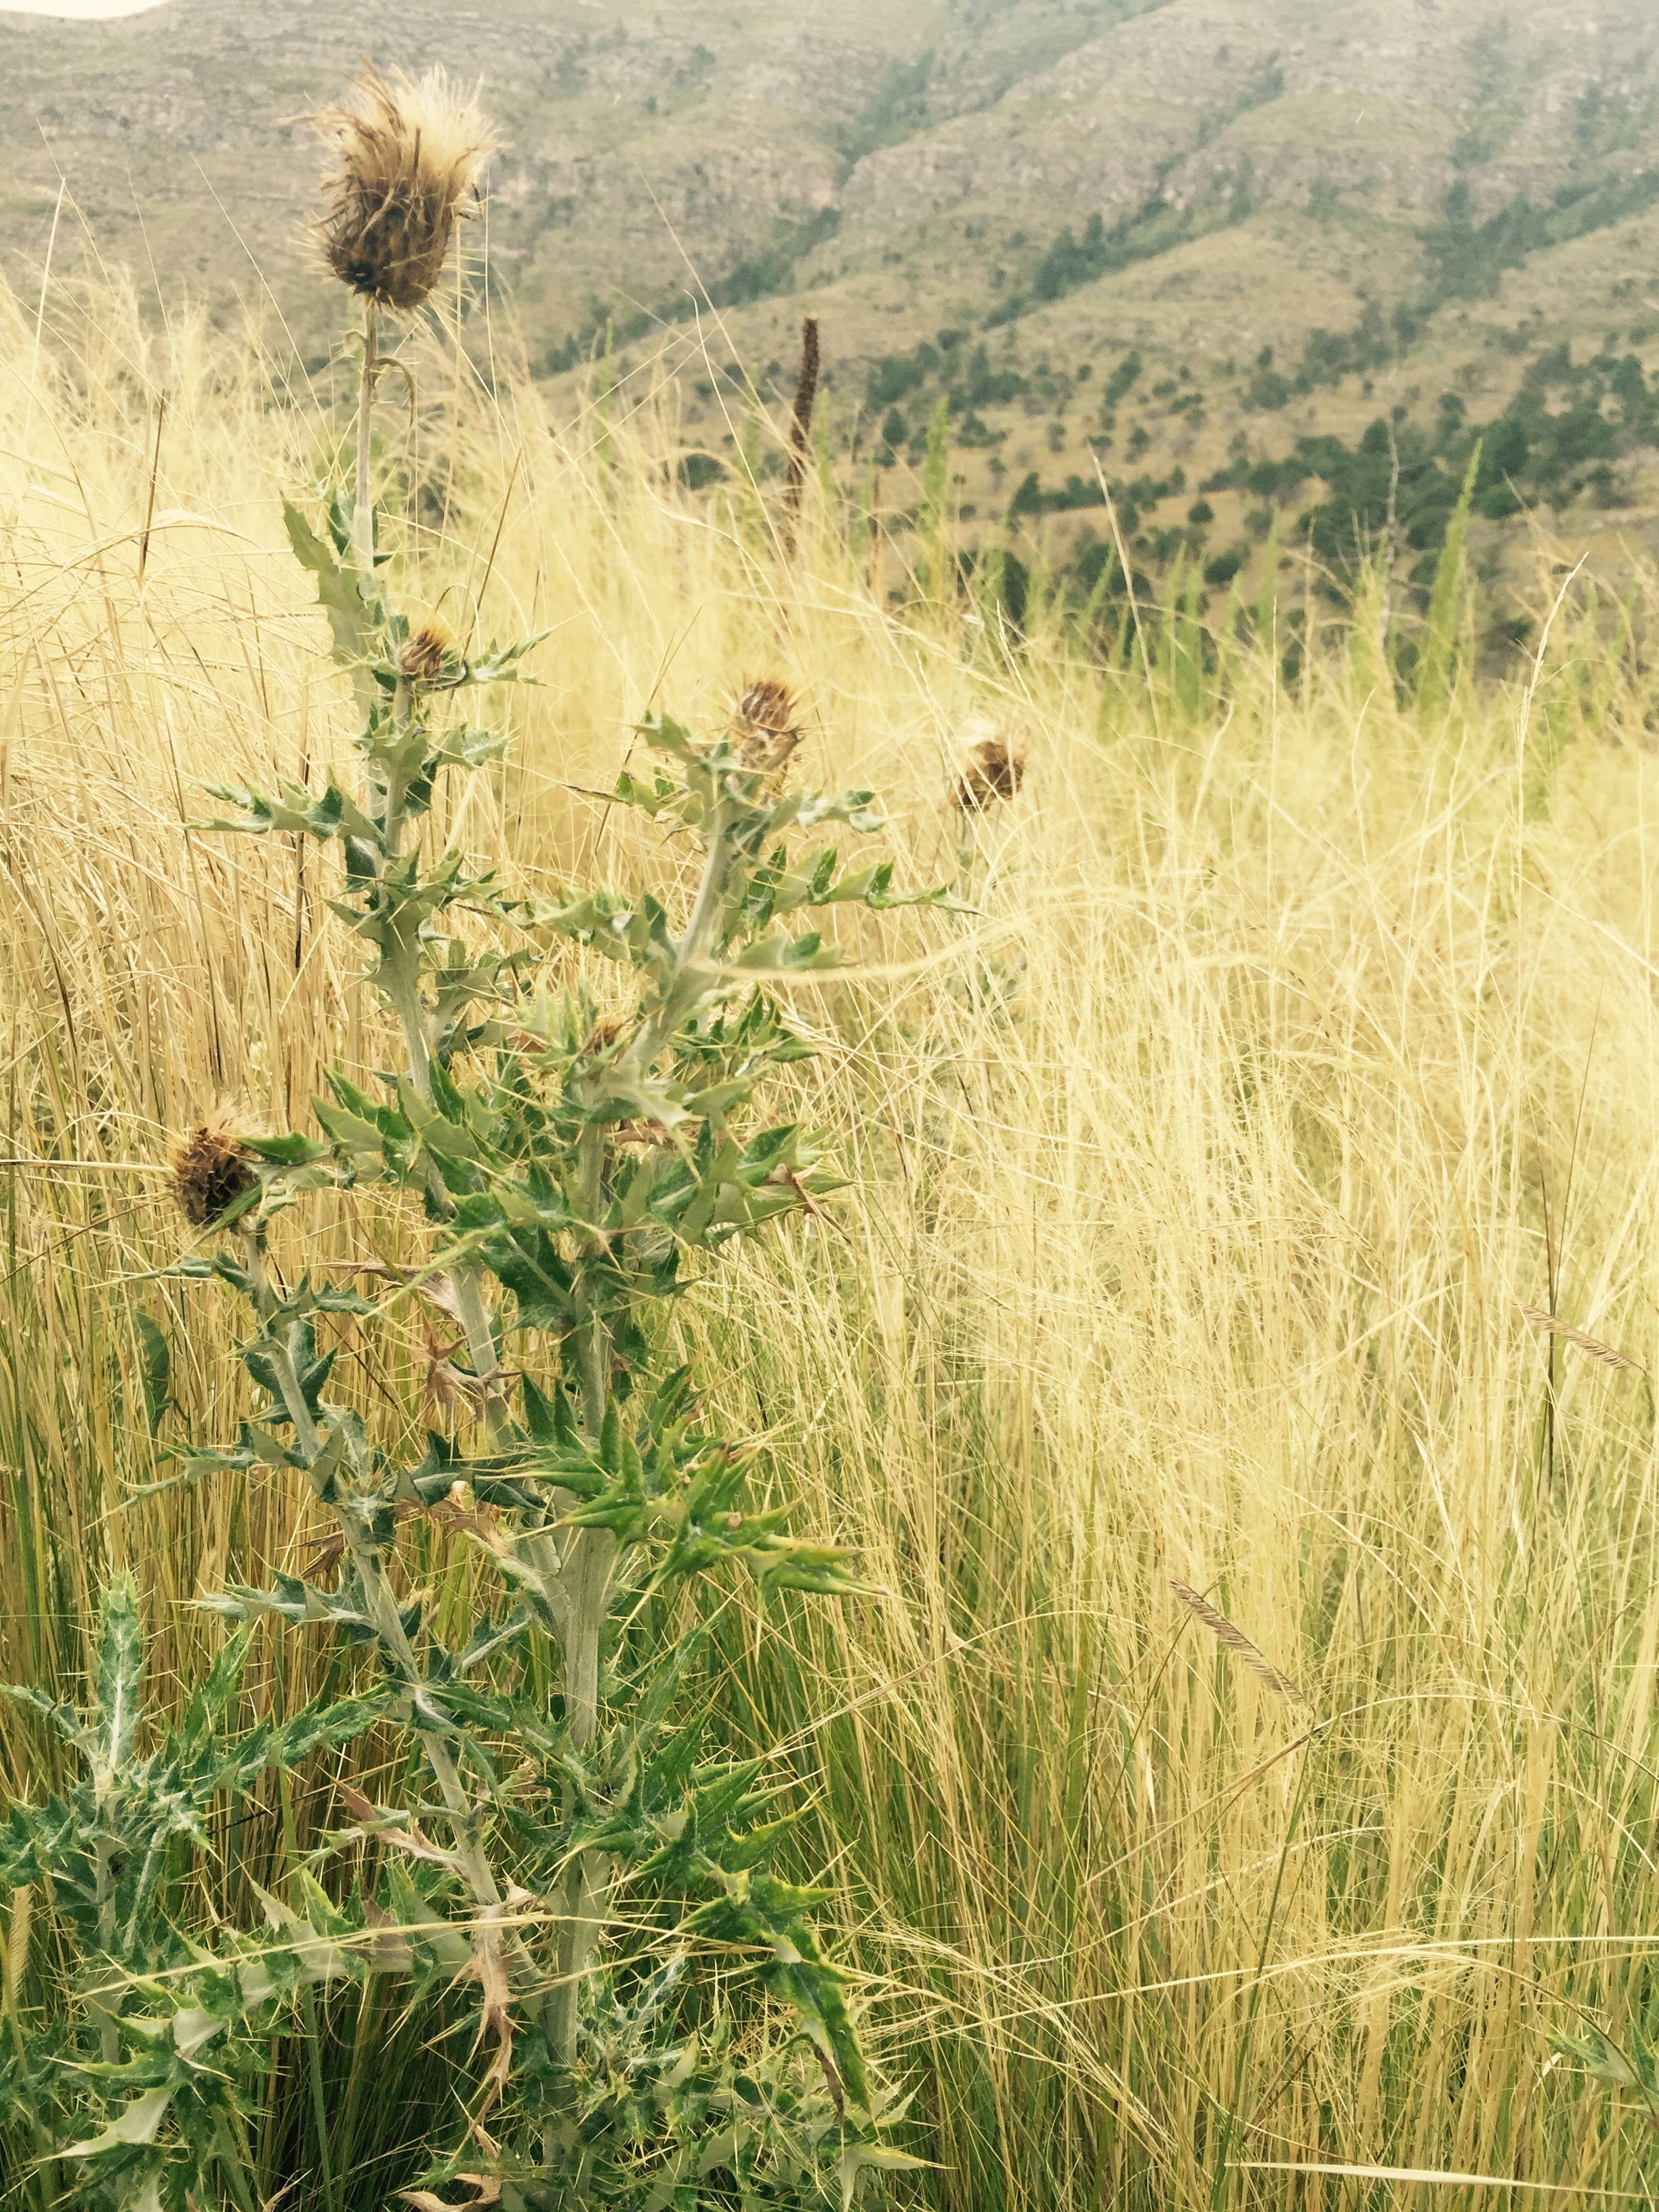 Thistle growing among dense grasses in a grassland habitat